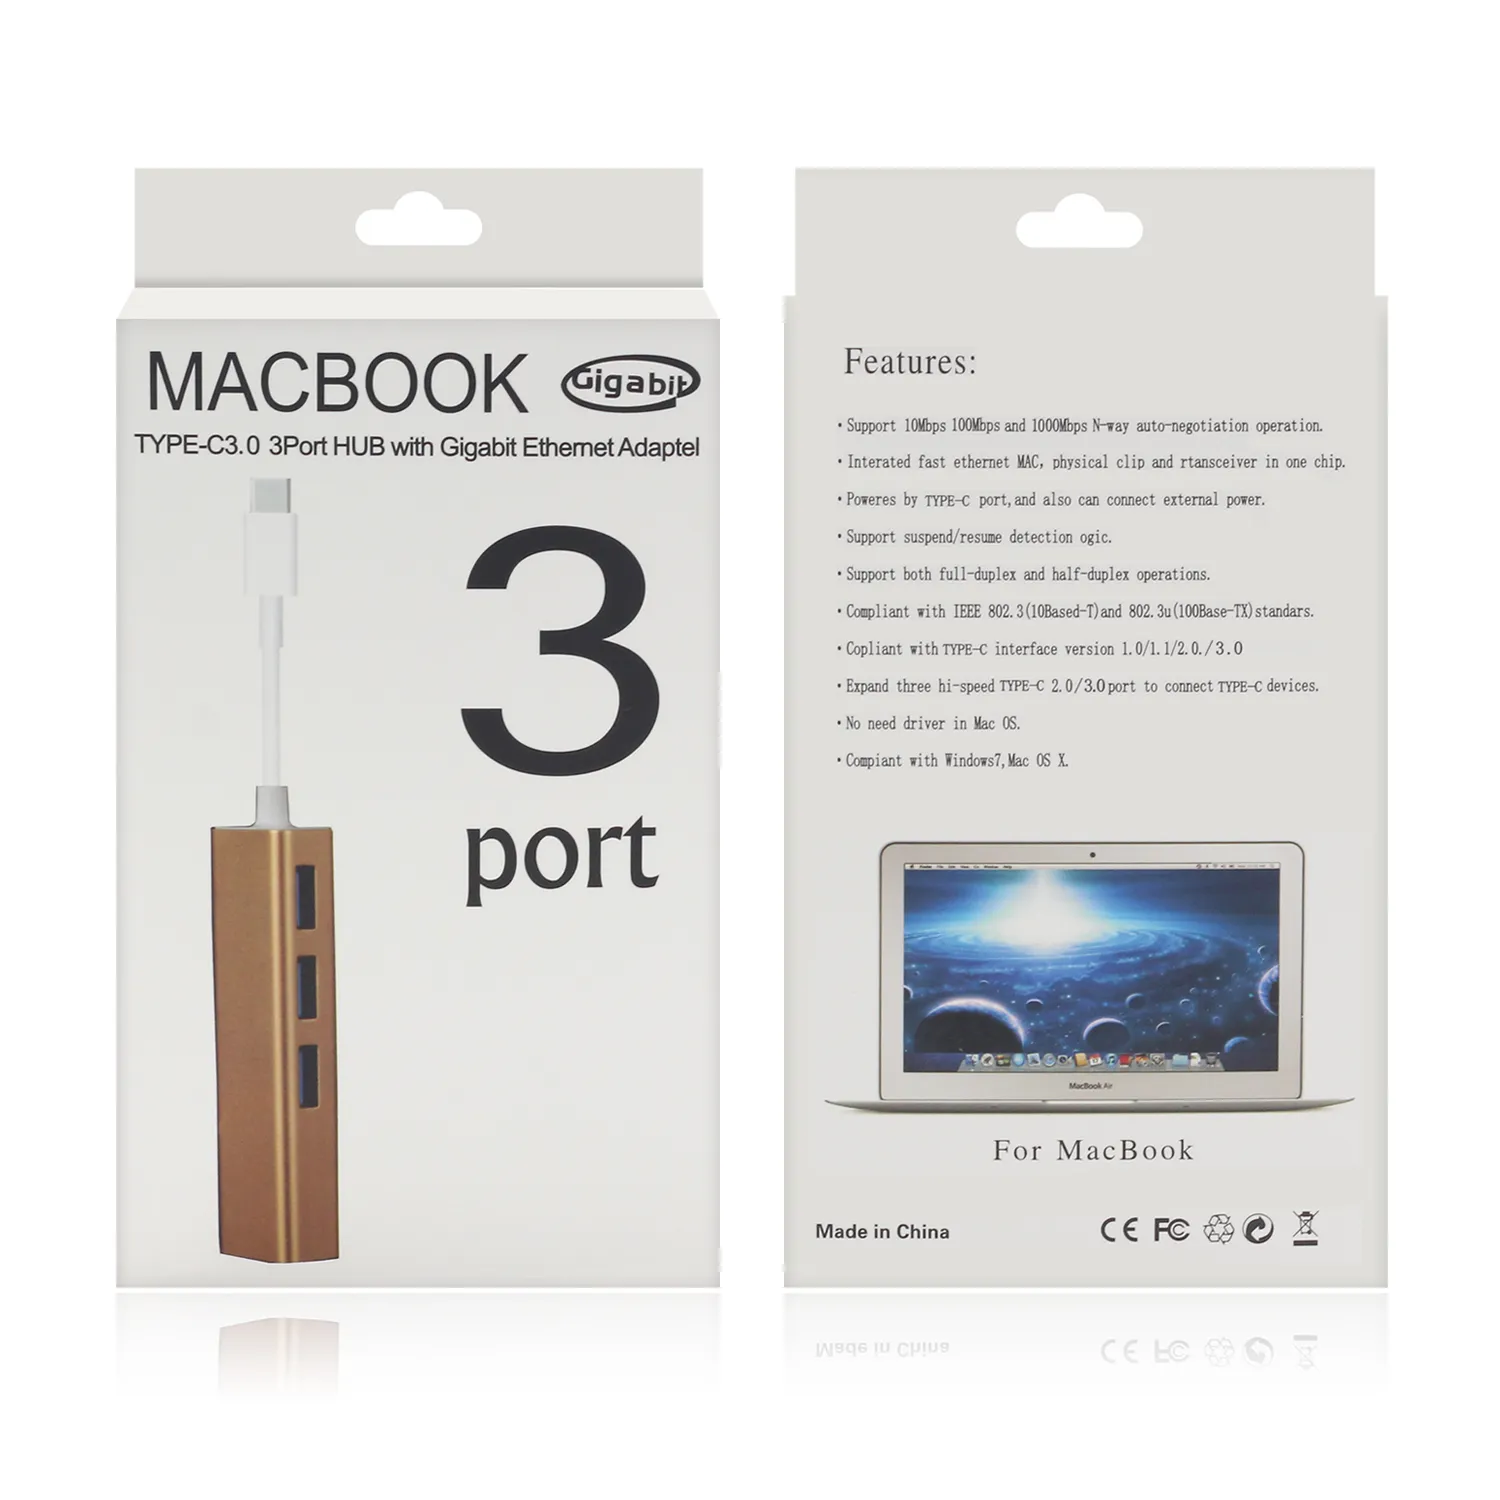 MacBook Pro PC 유형 기가비트 RJ45 LAN 용 3 USB 3.0 허브가 포함 된 USB C 이더넷 어댑터